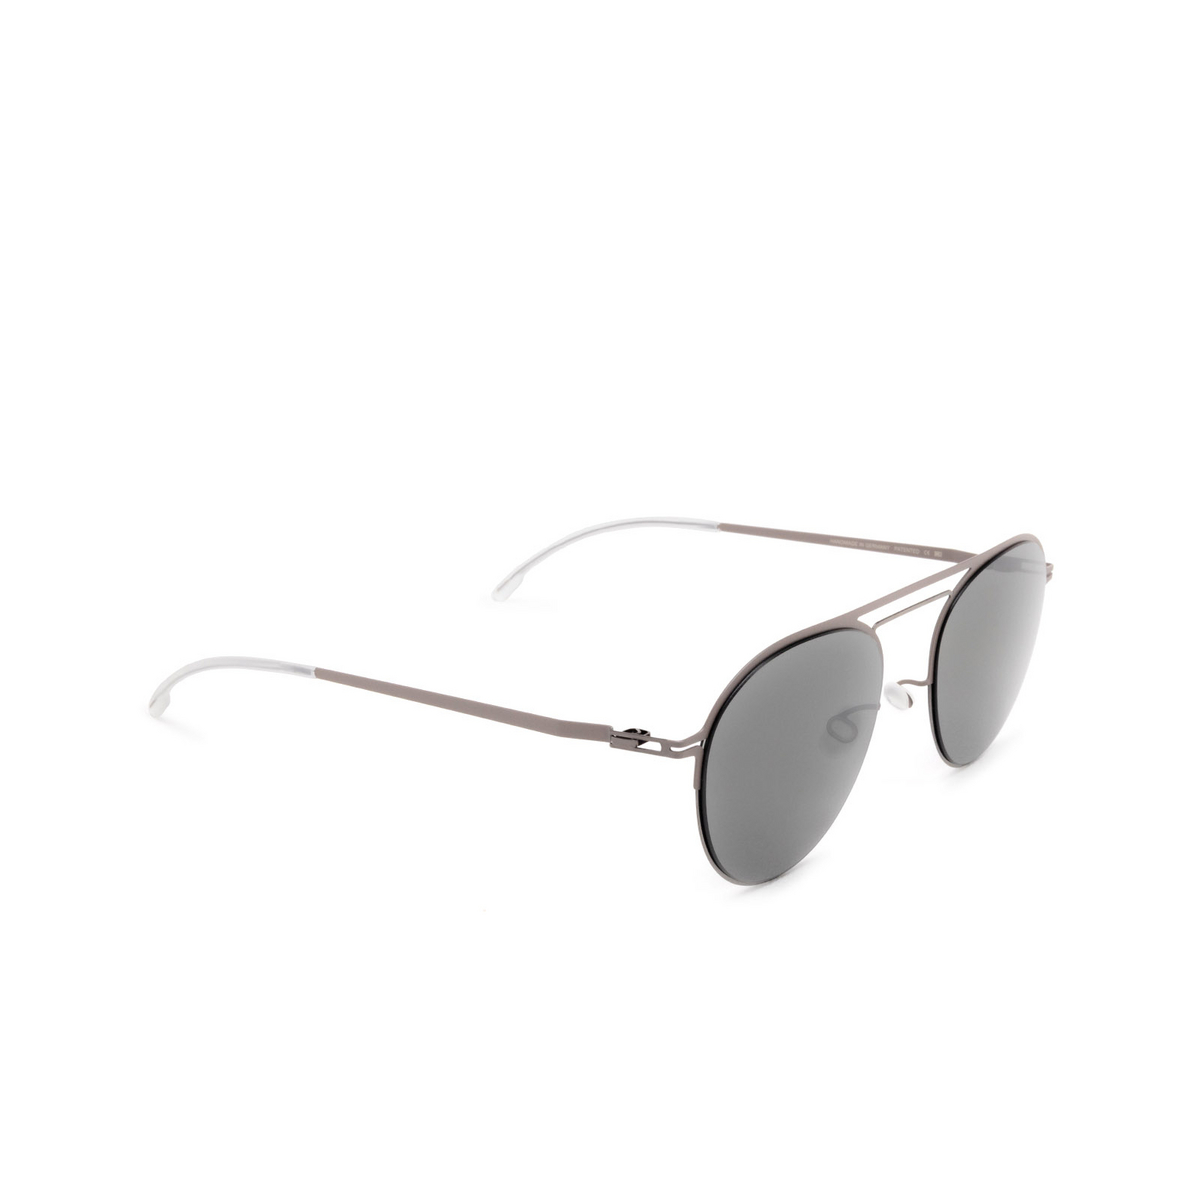 Mykita DUANE SUN Sunglasses 235 Shiny Graphite/Mole Grey - three-quarters view